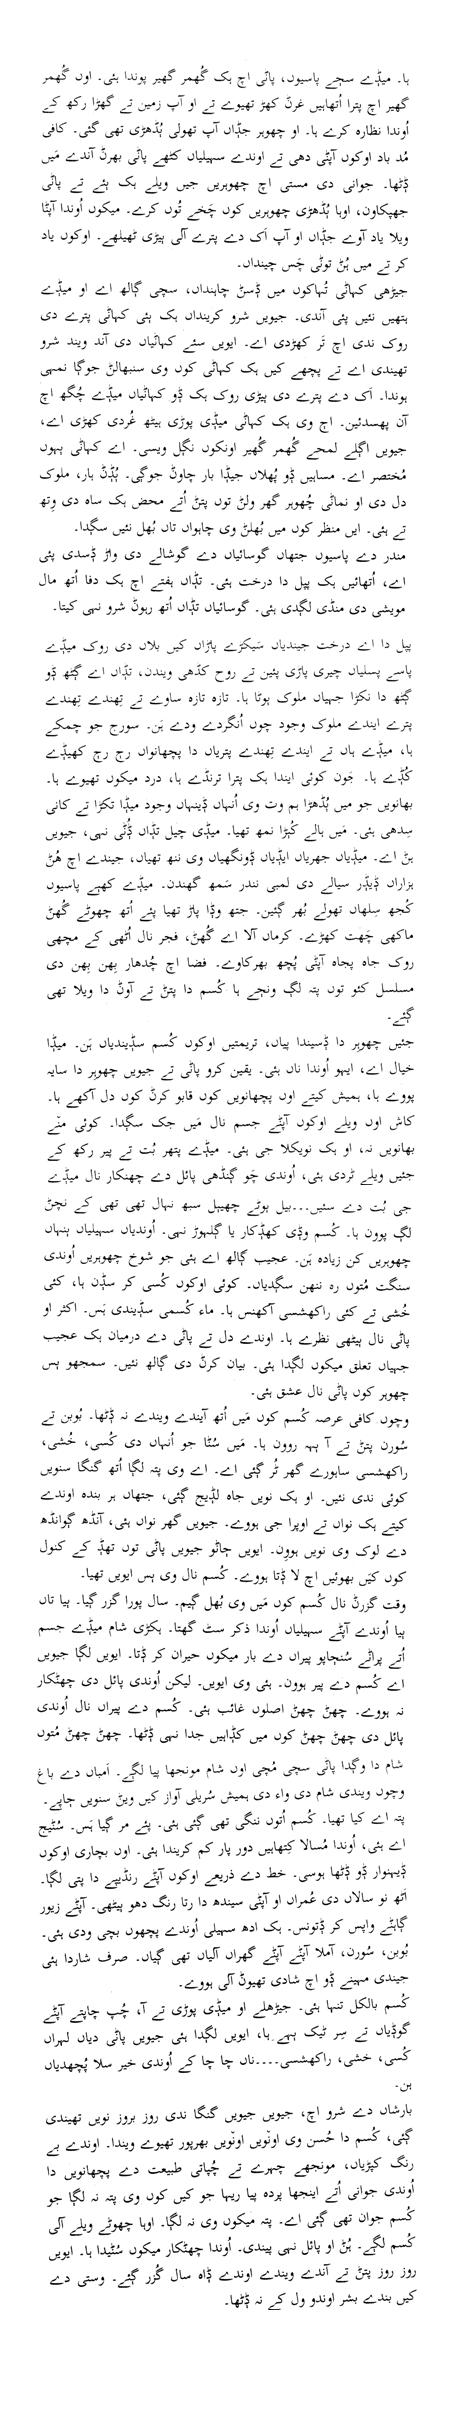 Seraiki Afsana Pattan kitha (Rabindar Nath Tagore translator Mazar Khan) Part-2